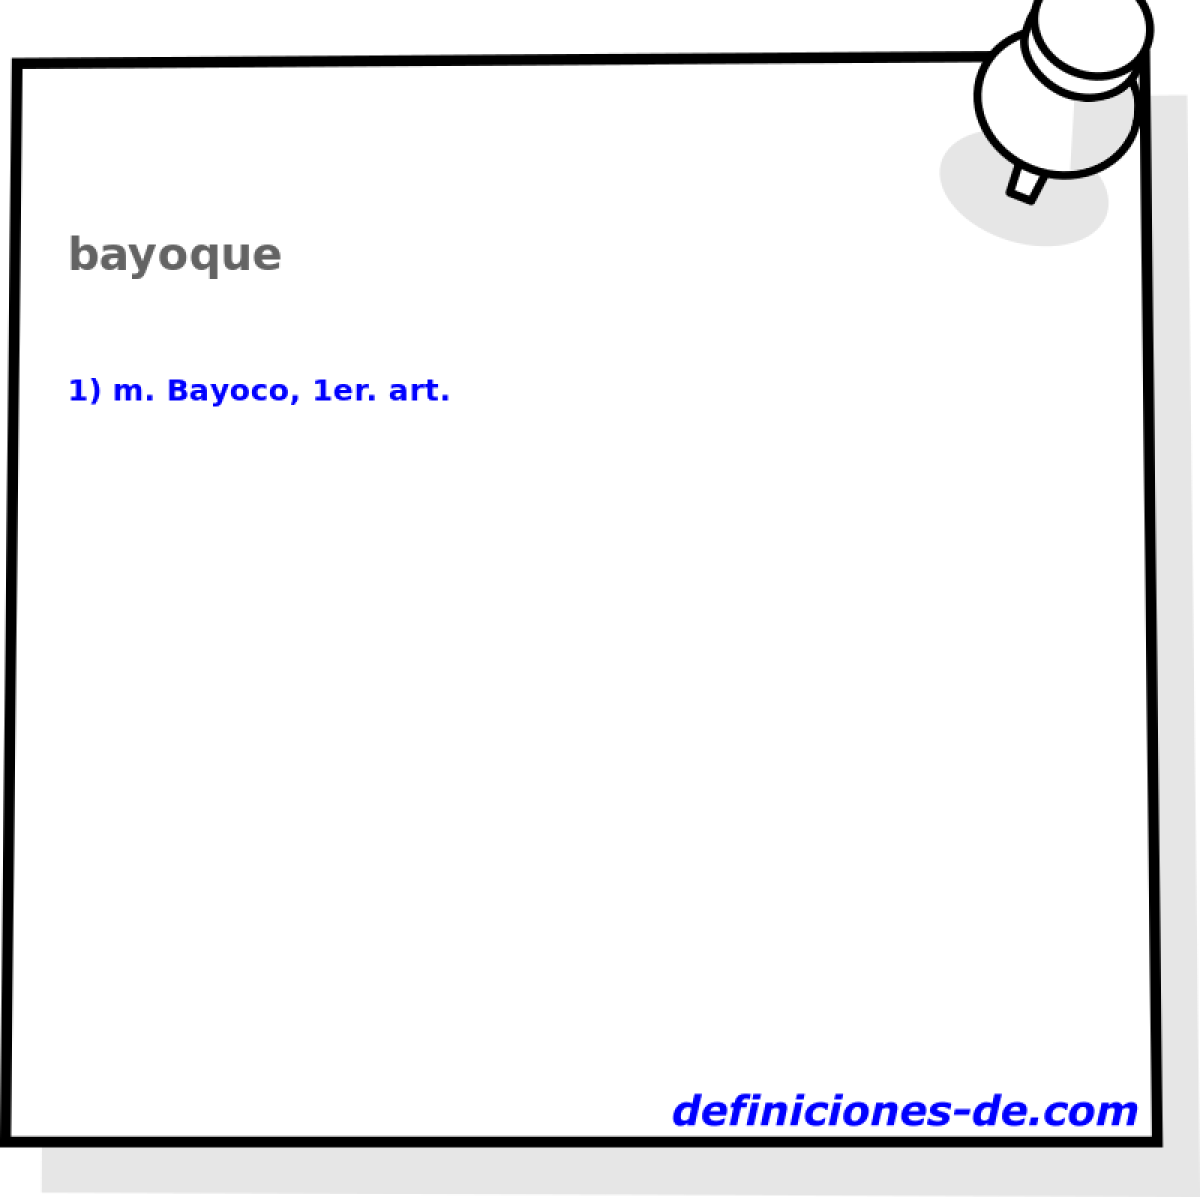 bayoque 